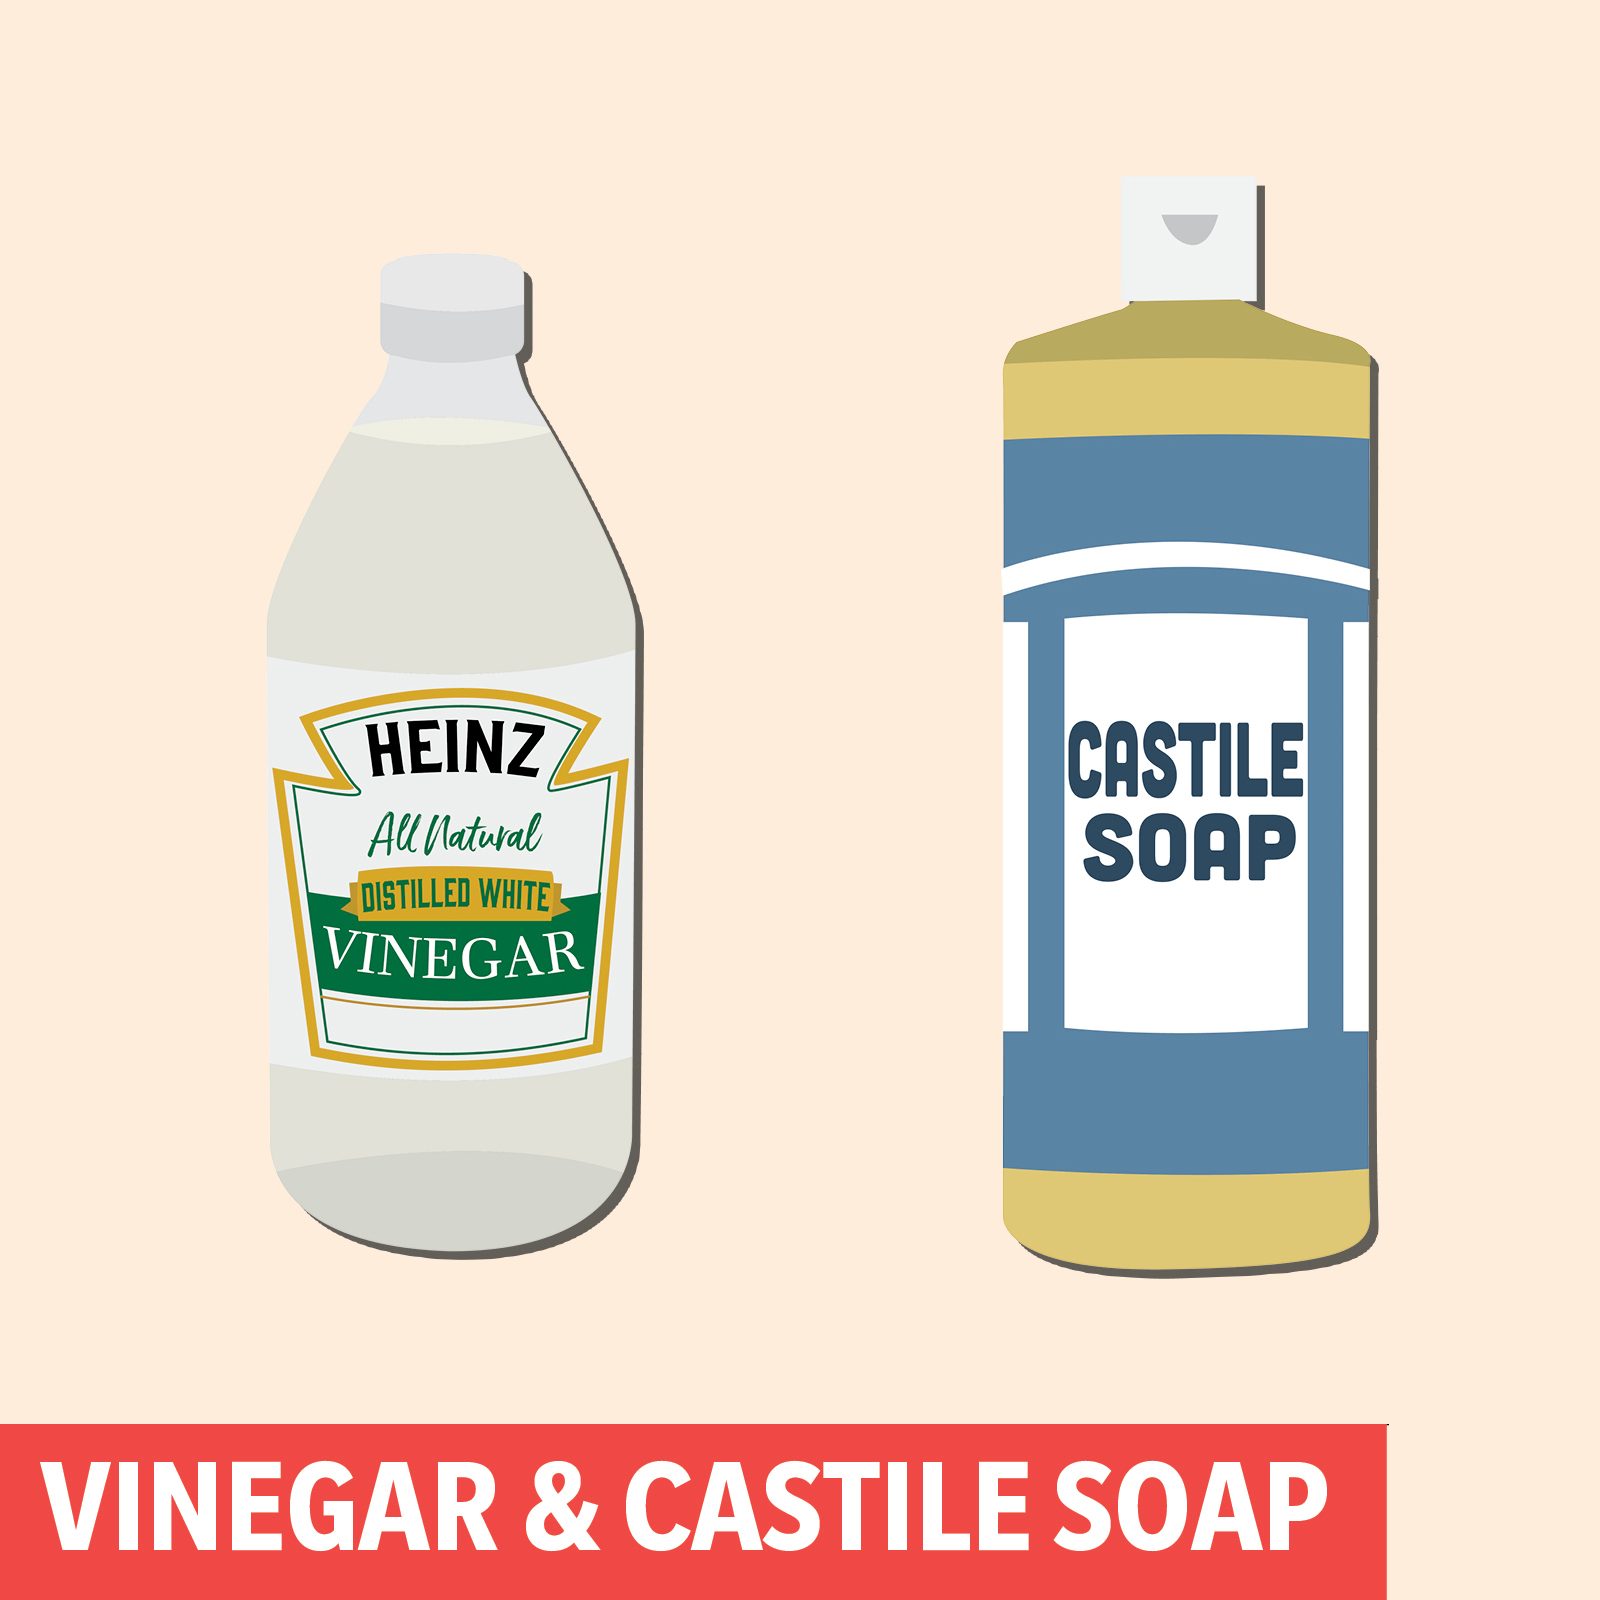 https://www.tasteofhome.com/wp-content/uploads/2018/12/Vinegar-and-Castile-Soap-copy.jpg?fit=700%2C700